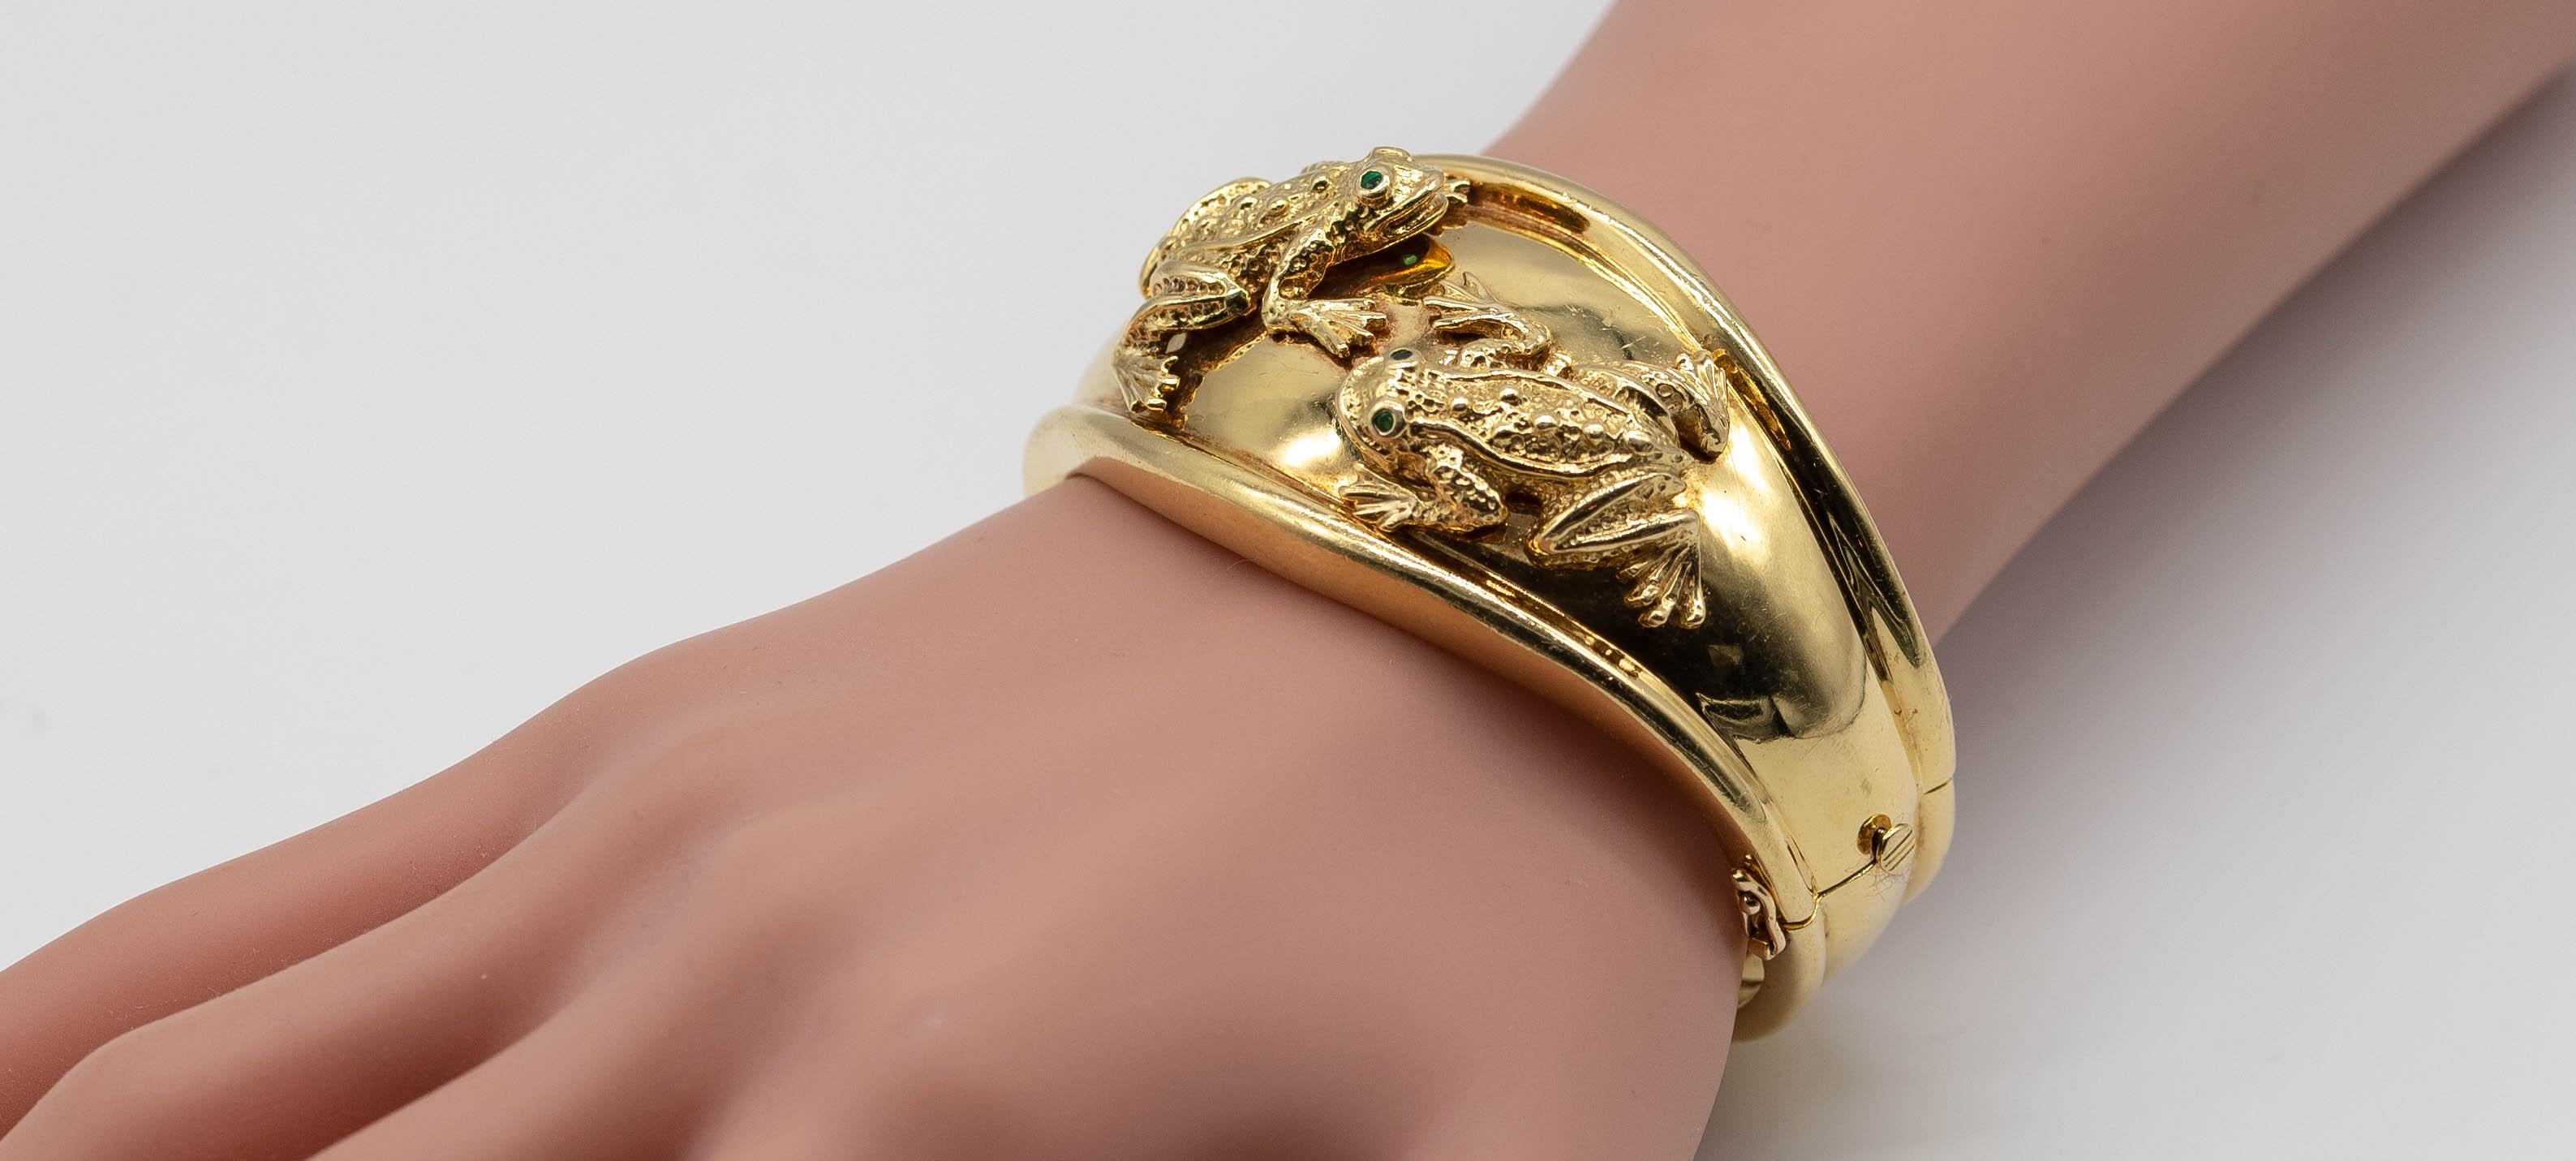 Delightful Frog Motif 18 Karat Gold Bangle Bracelet In Good Condition For Sale In New York, NY